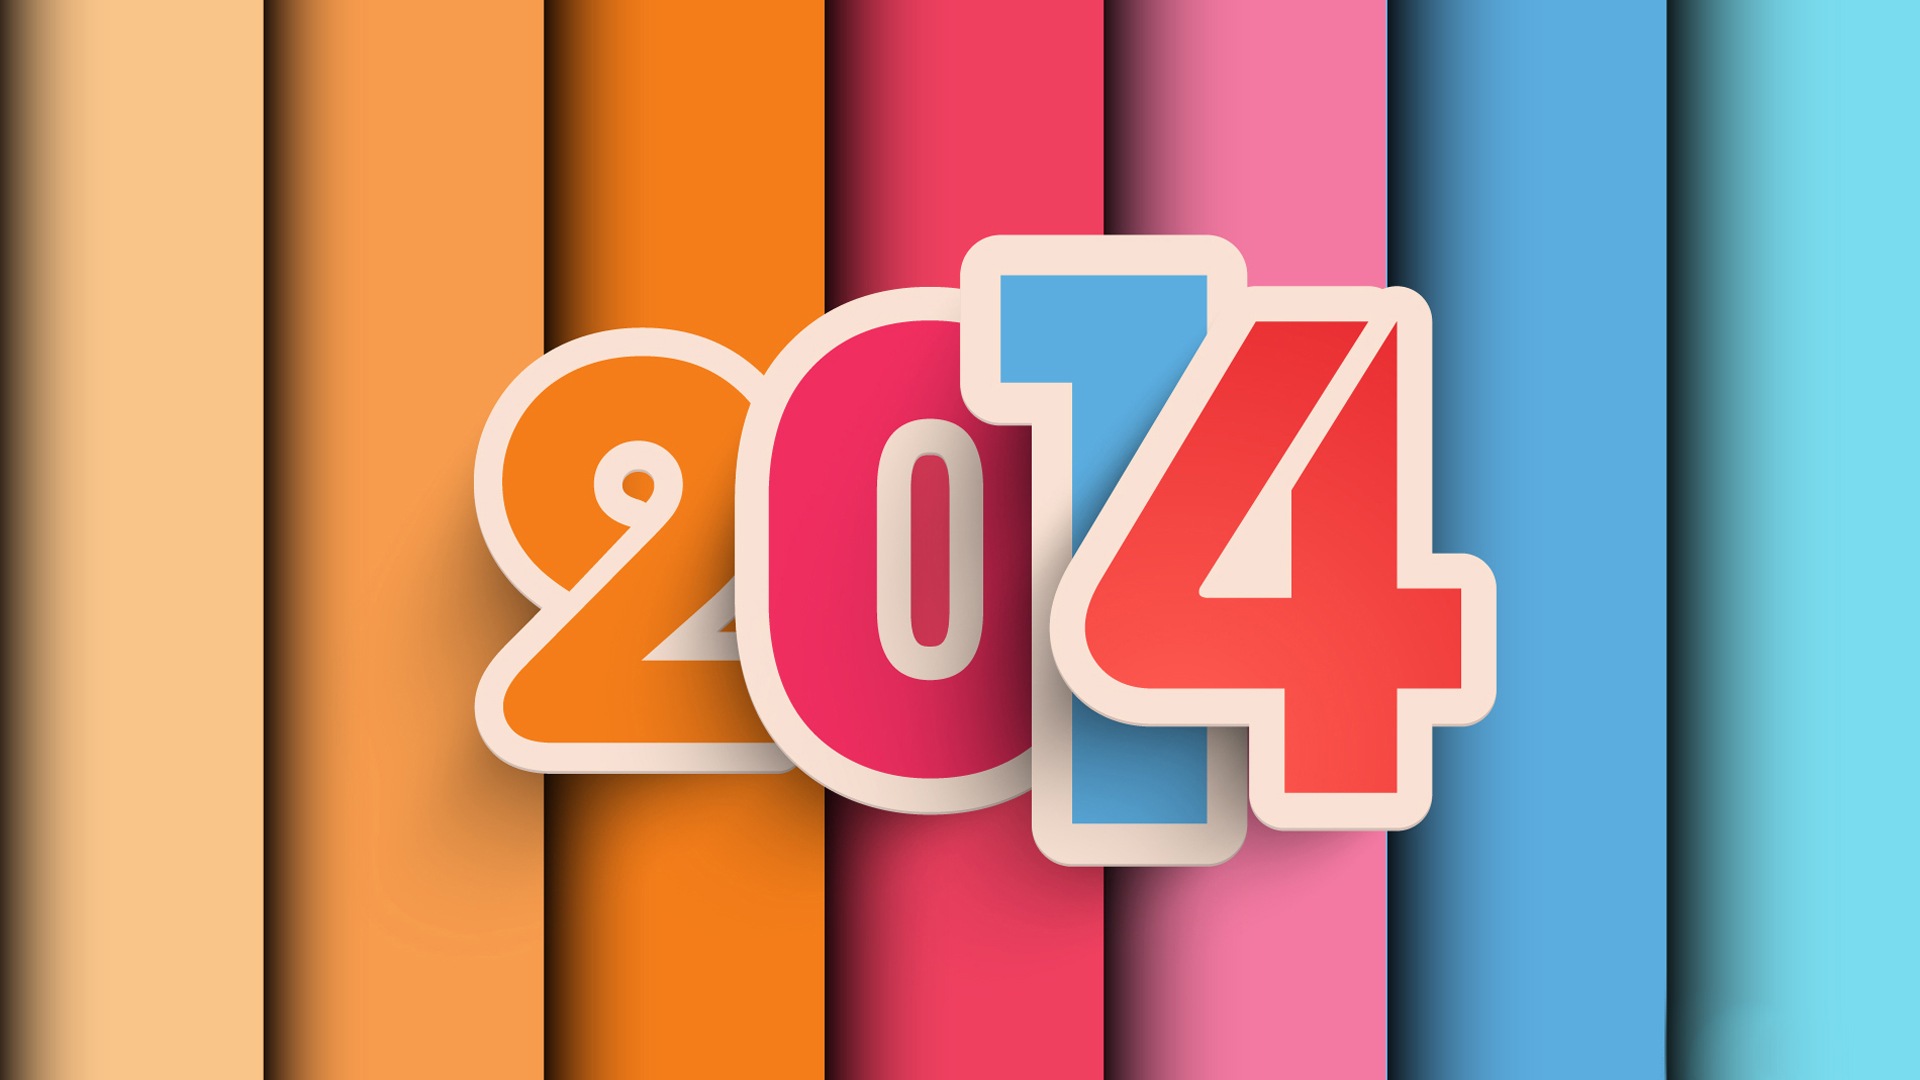 2014 New Year Theme HD Fonds d'écran (1) #9 - 1920x1080